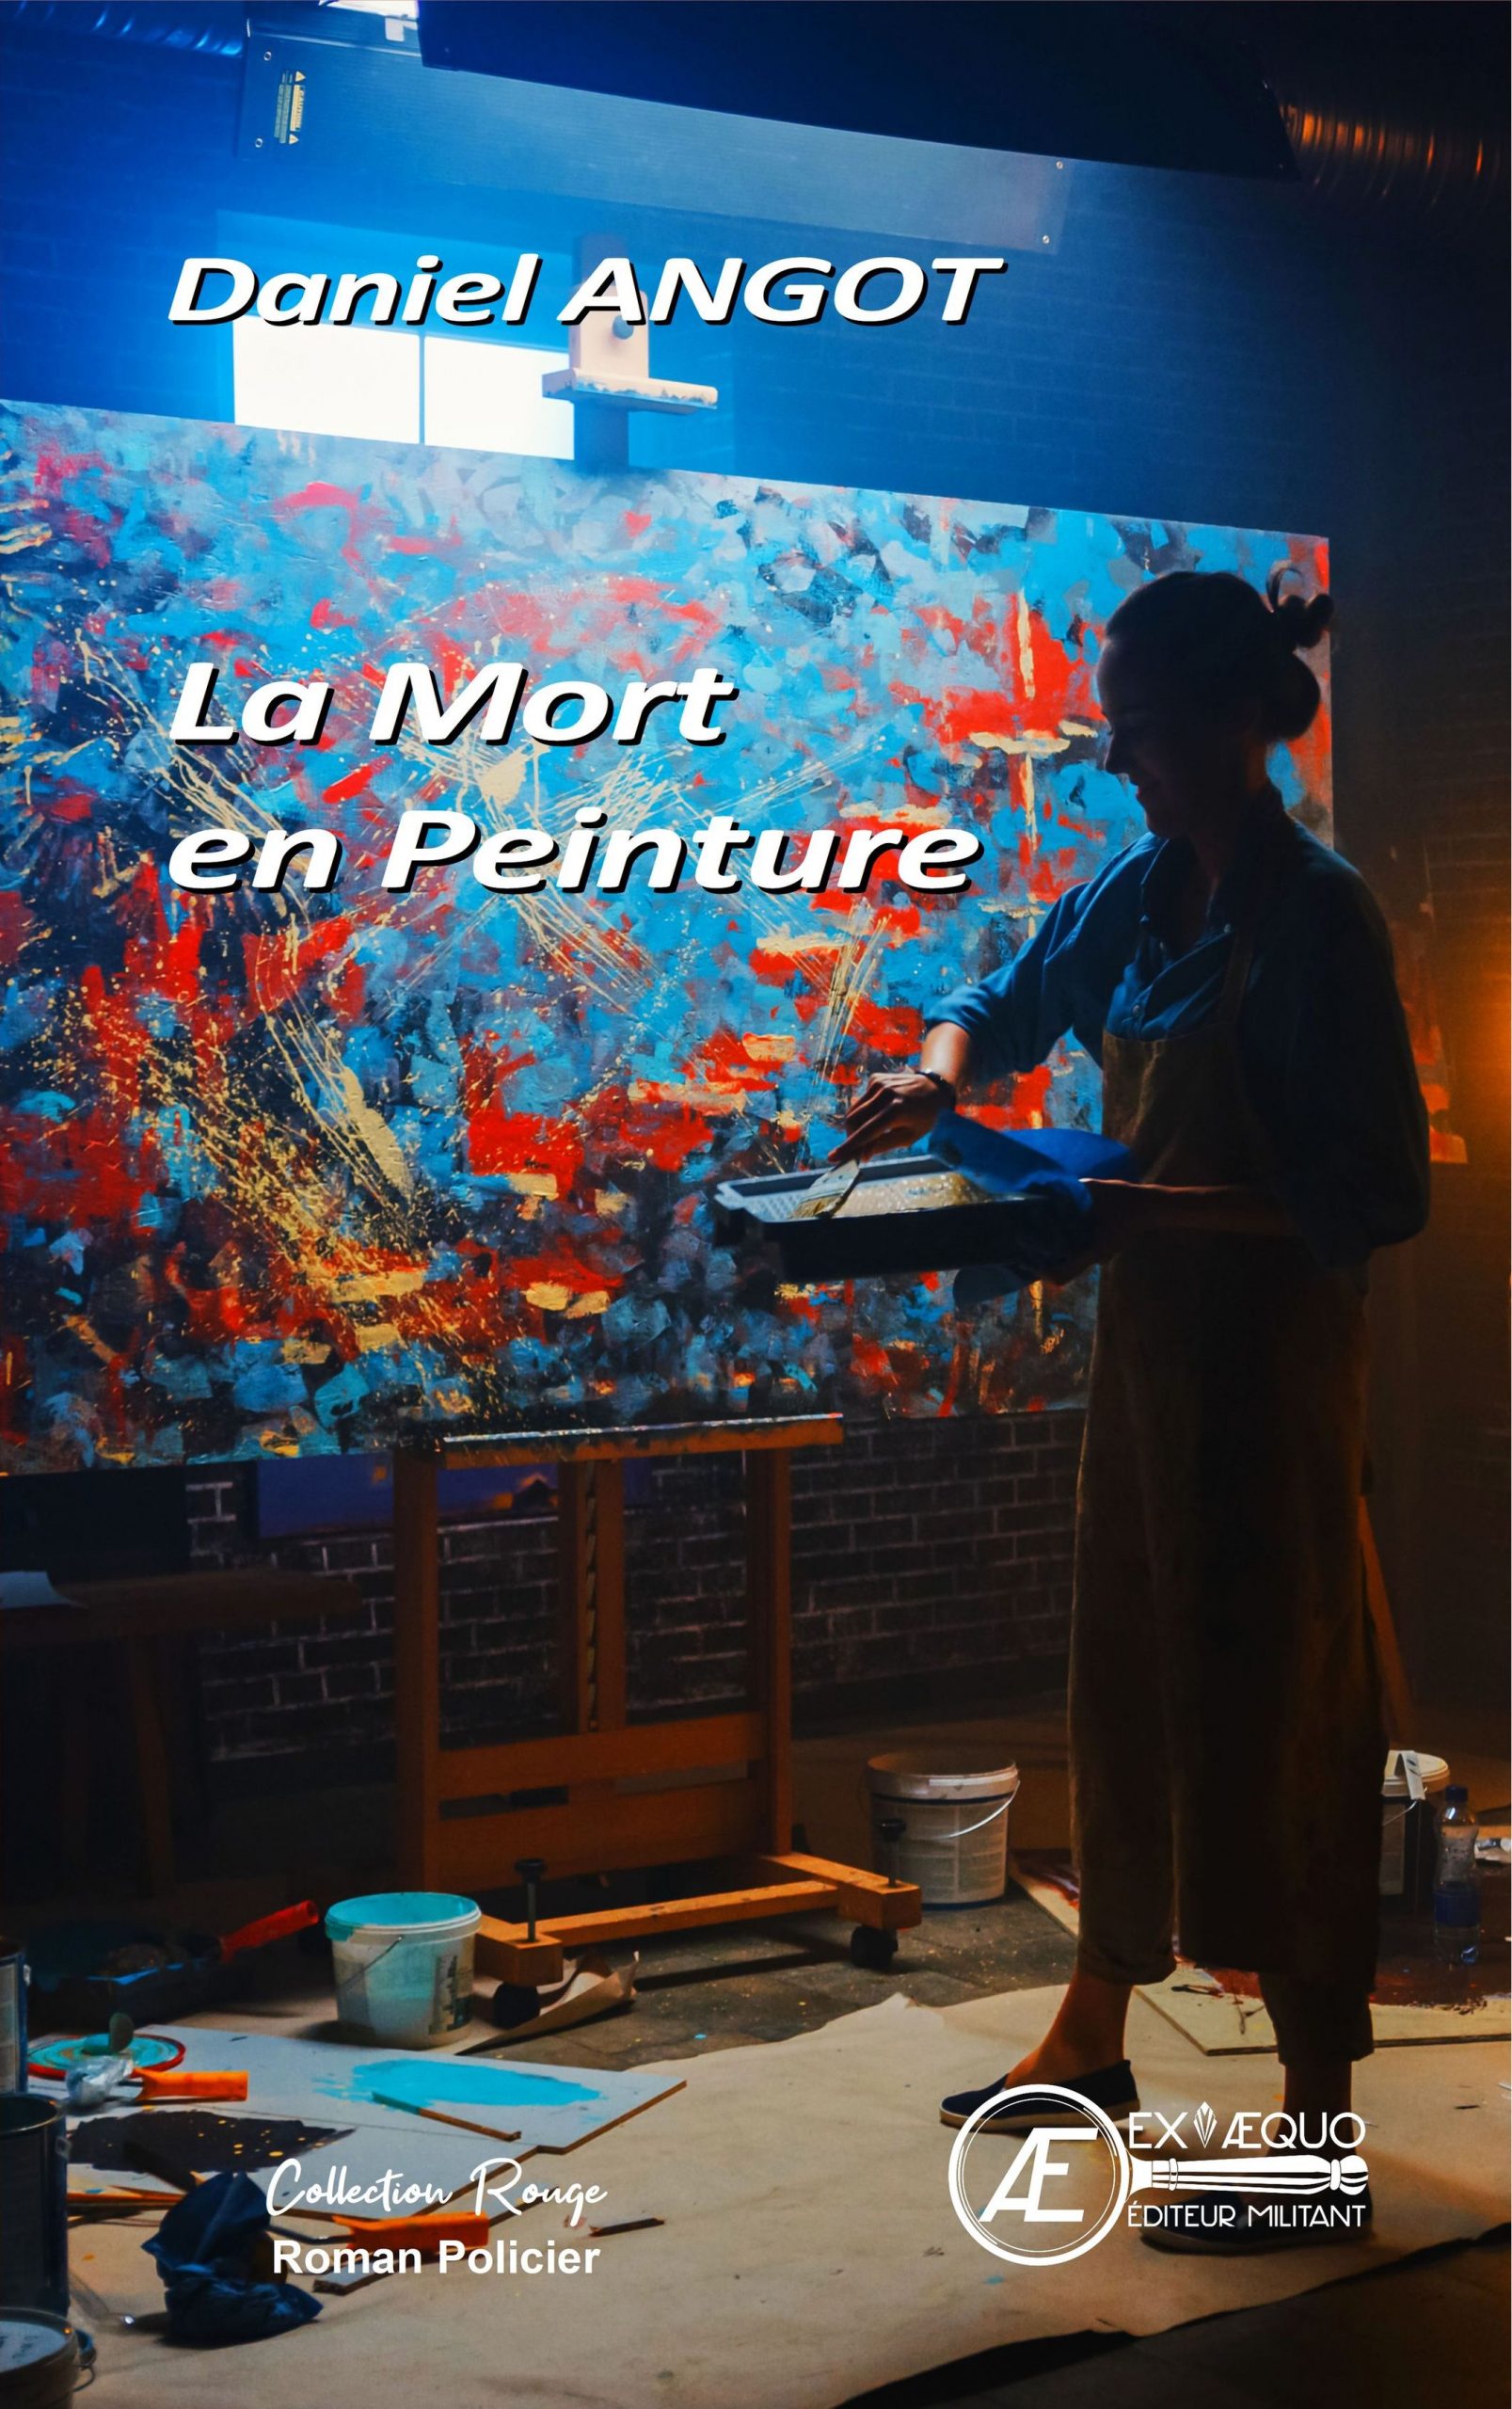 You are currently viewing La mort en peinture, de Daniel Angot